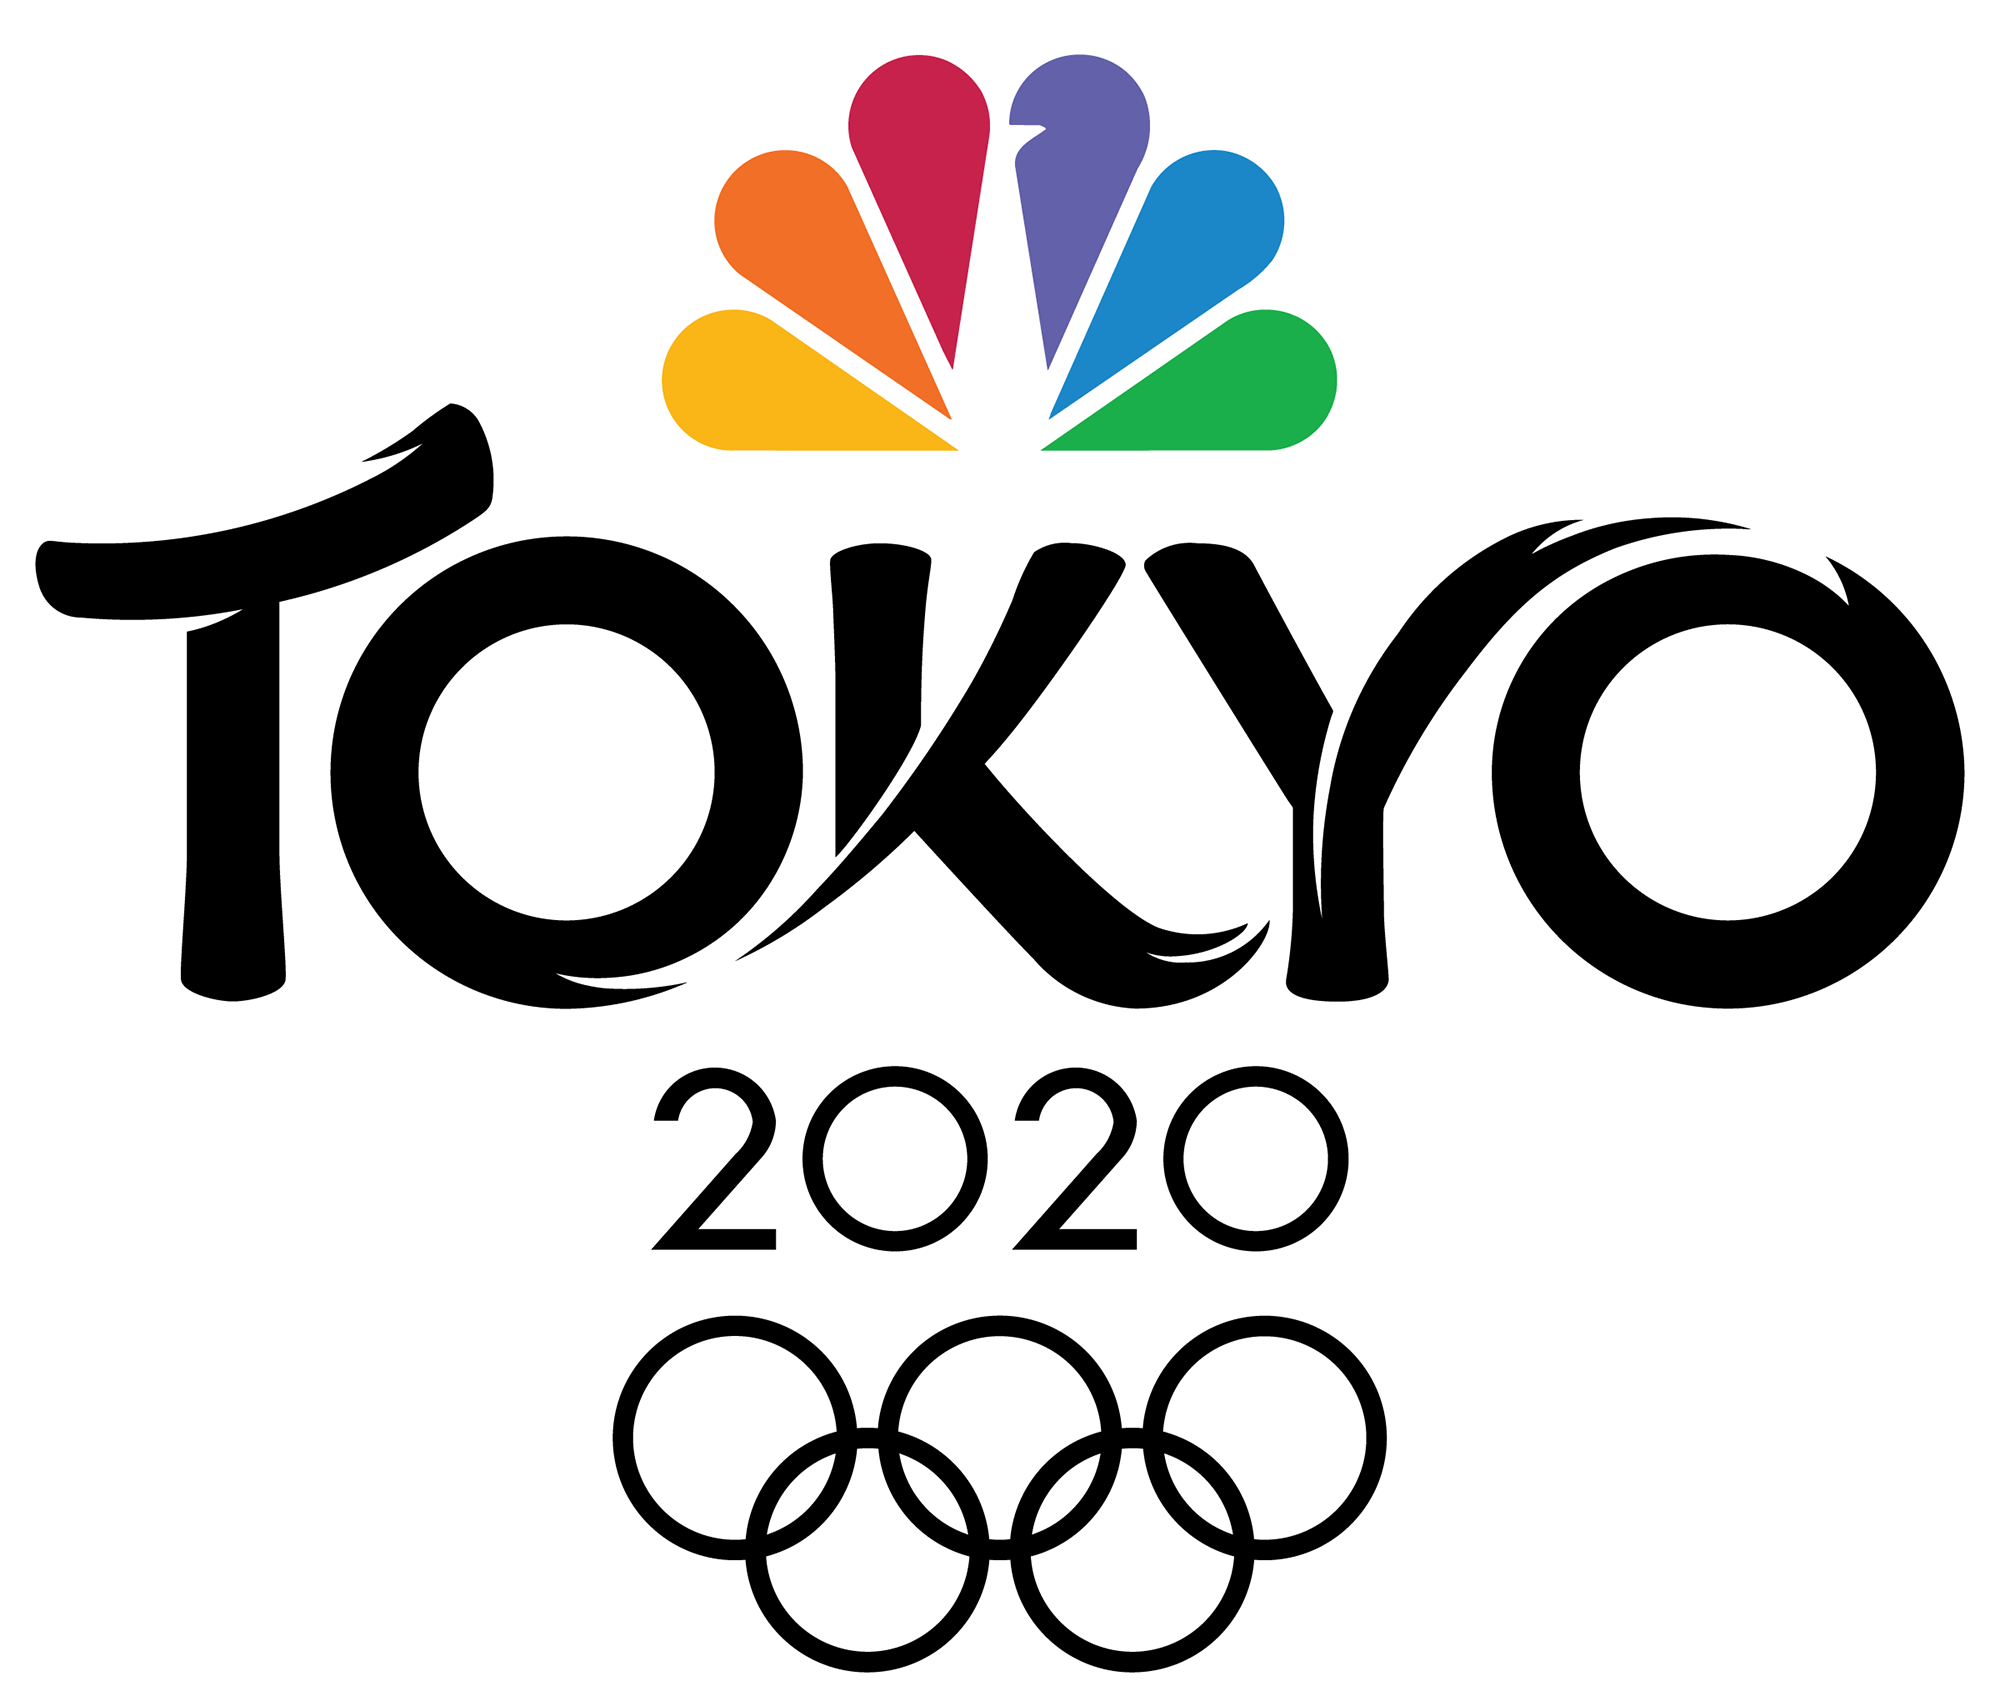 NBC Olympics Logo - Brand New: New Logo for NBC Olympics 2020 Broadcast